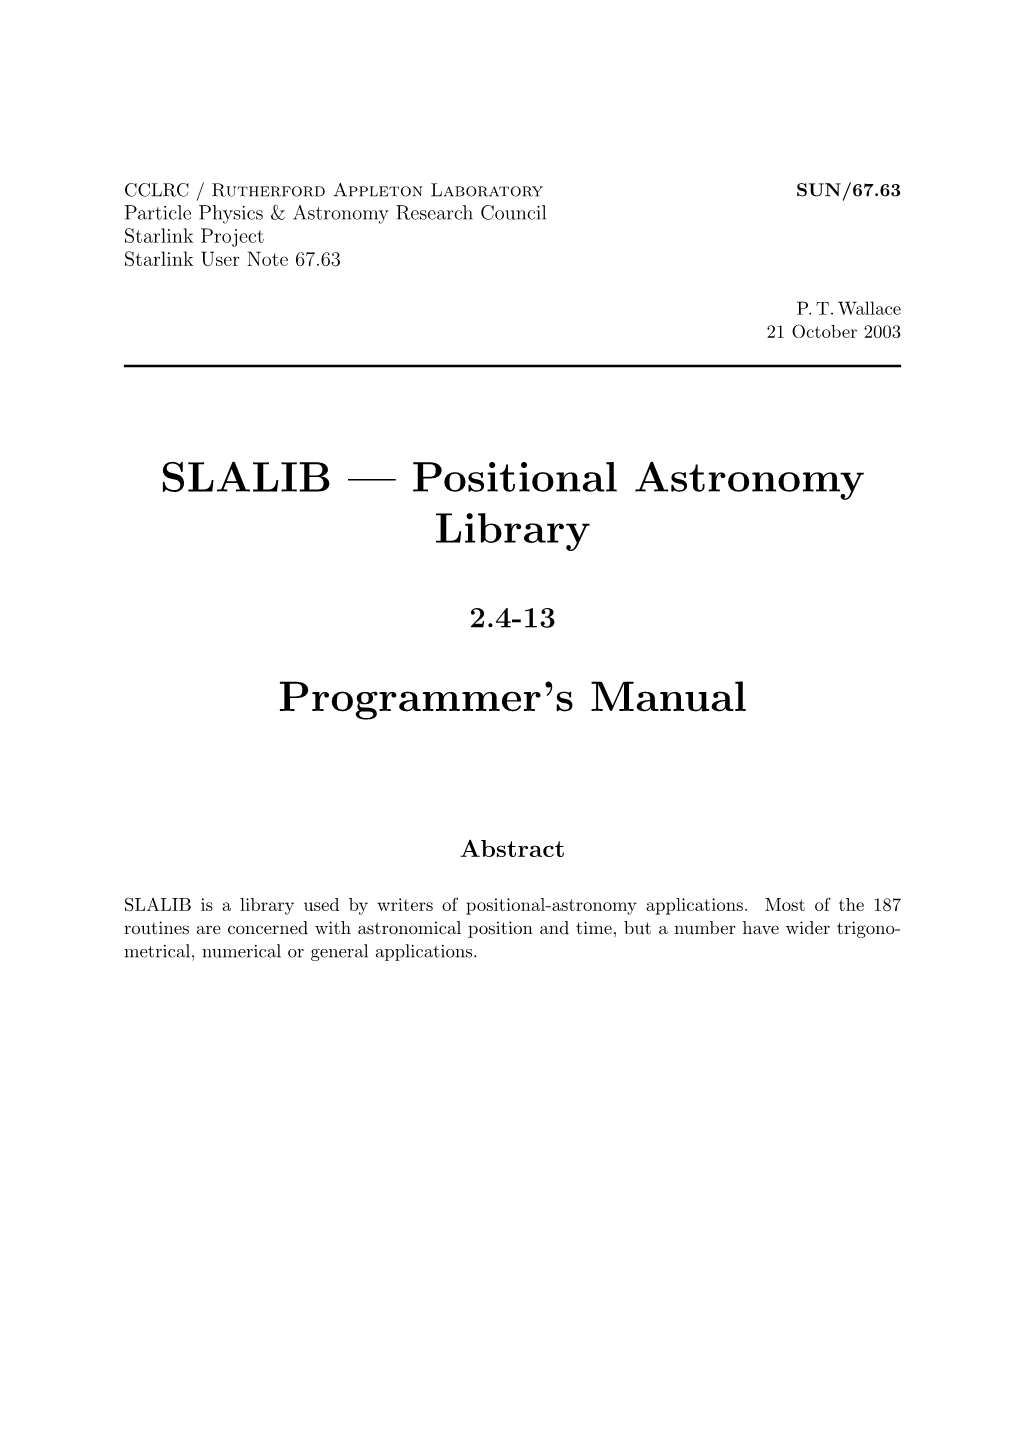 SLALIB — Positional Astronomy Library Programmer's Manual